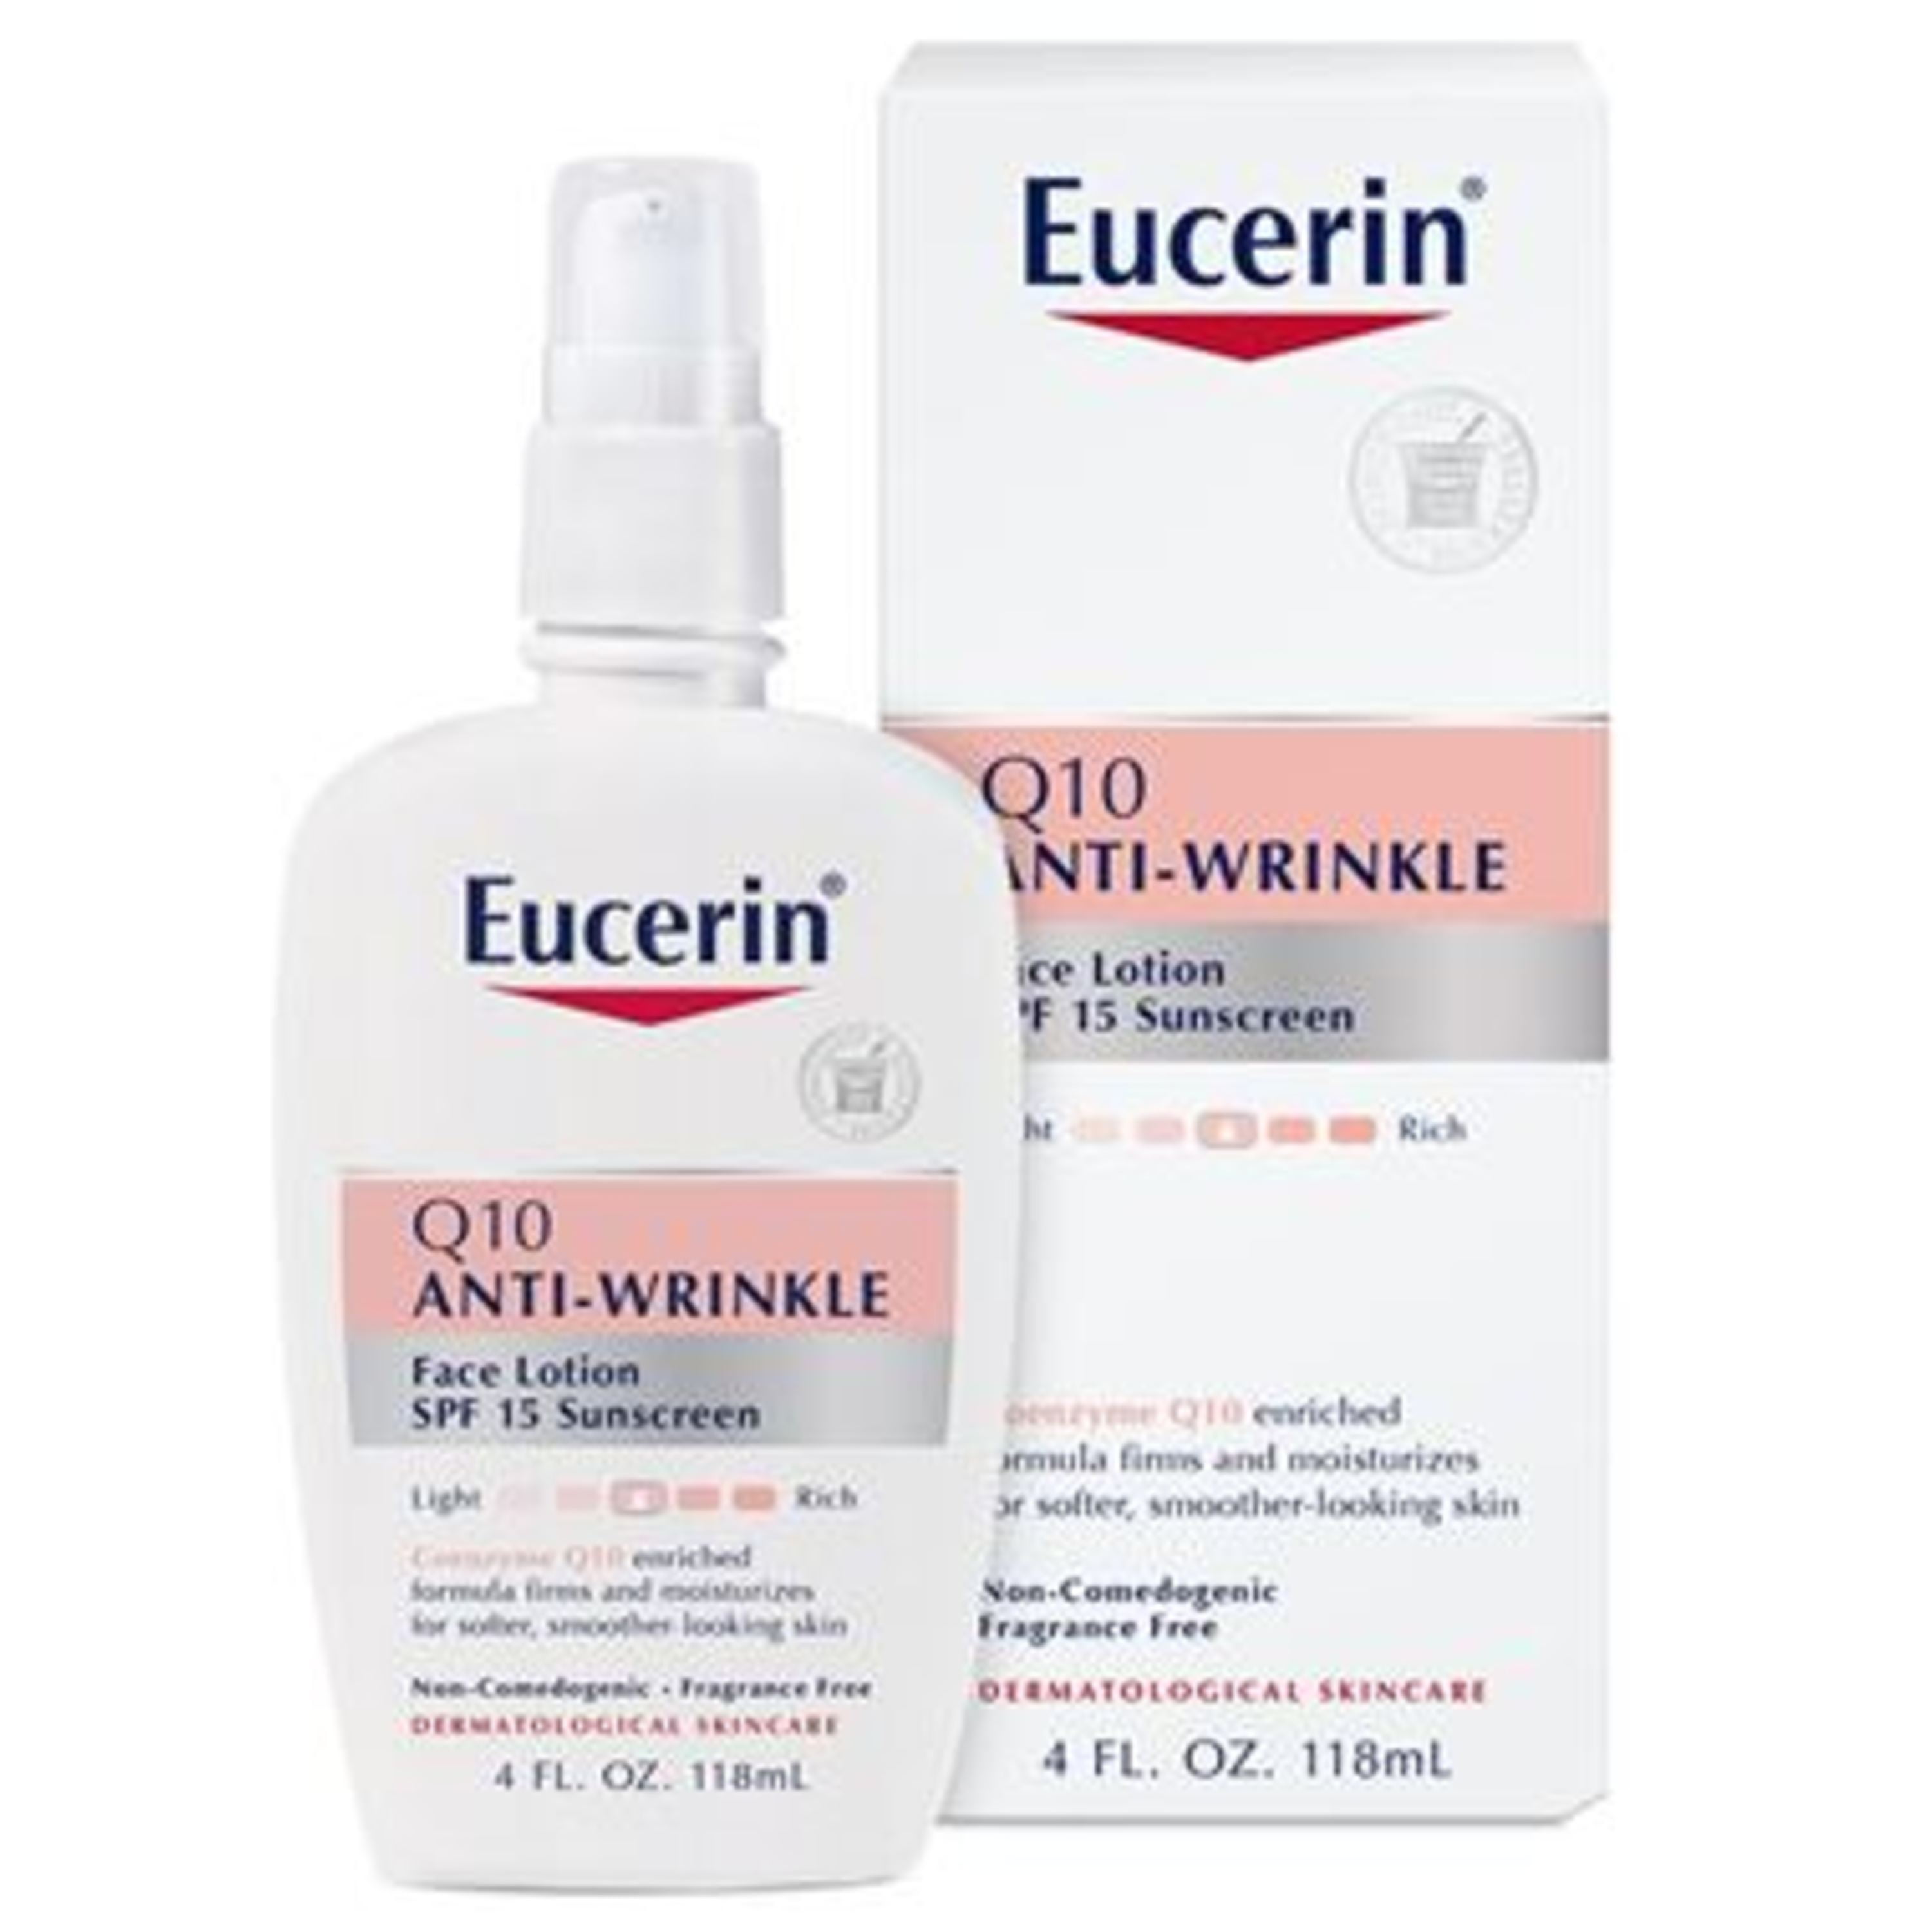 eucerin q10 anti wrinkle cream ingredients)